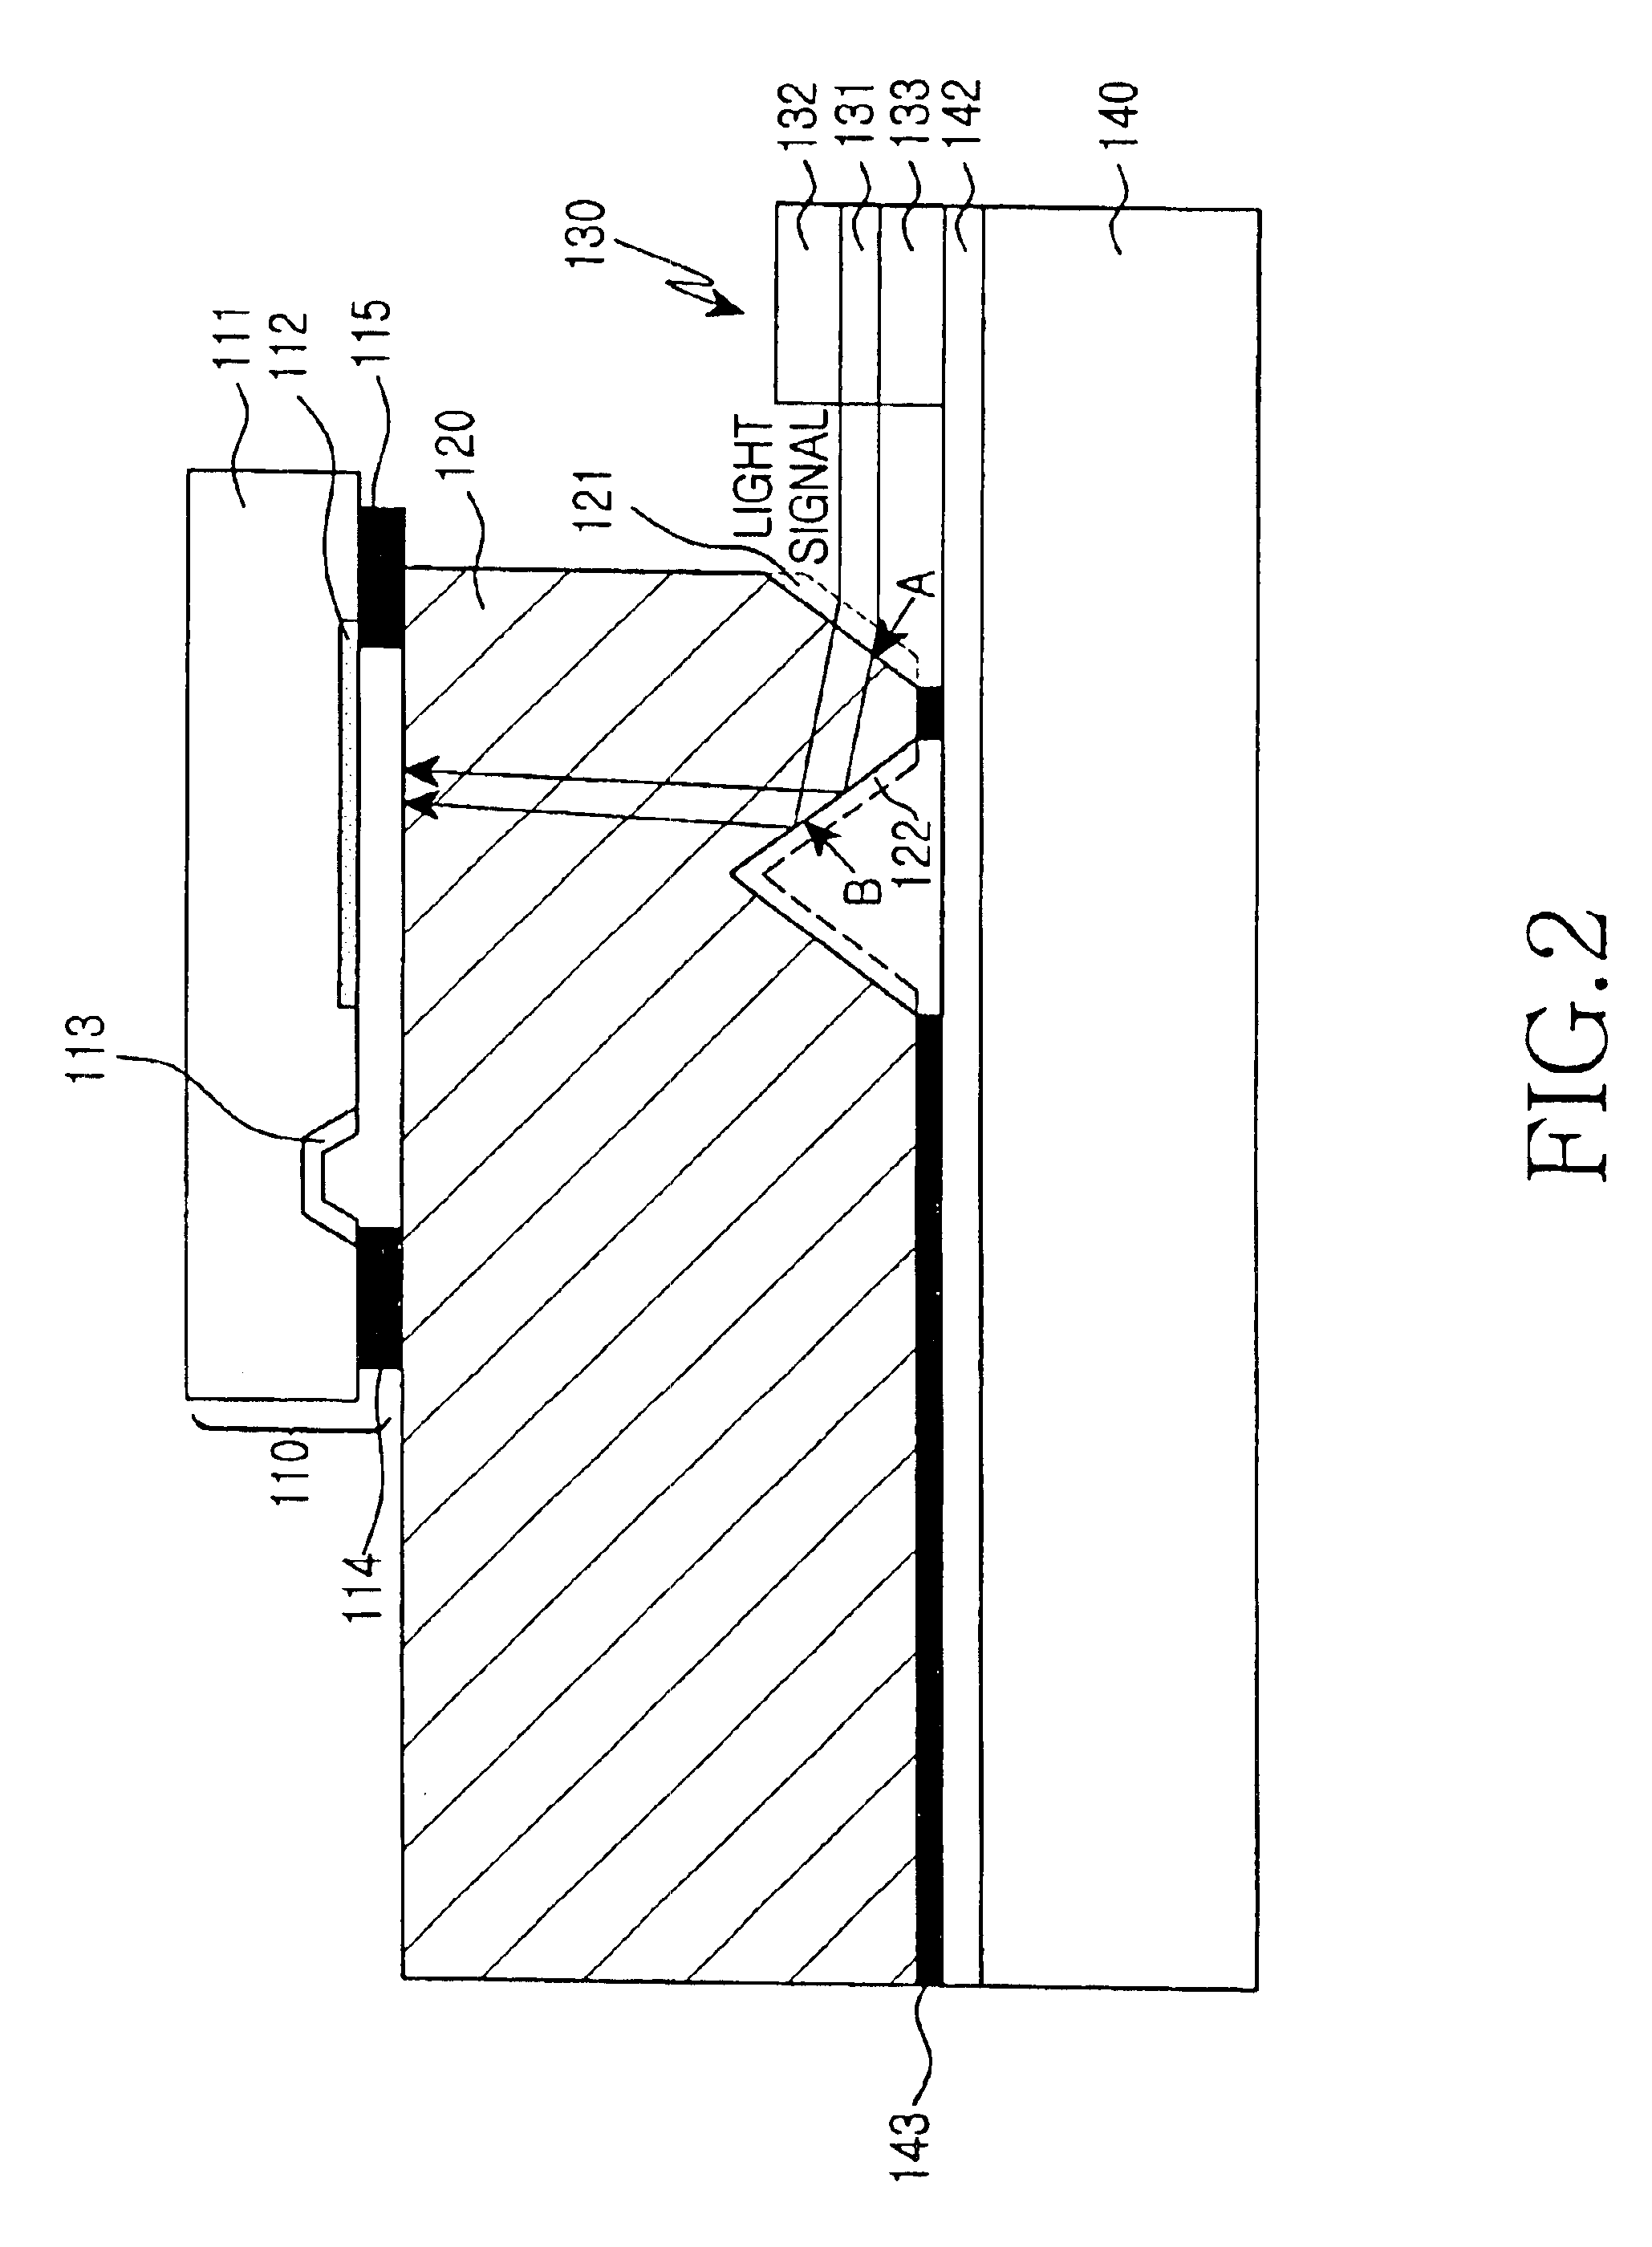 Optical apparatus using vertical light receiving element